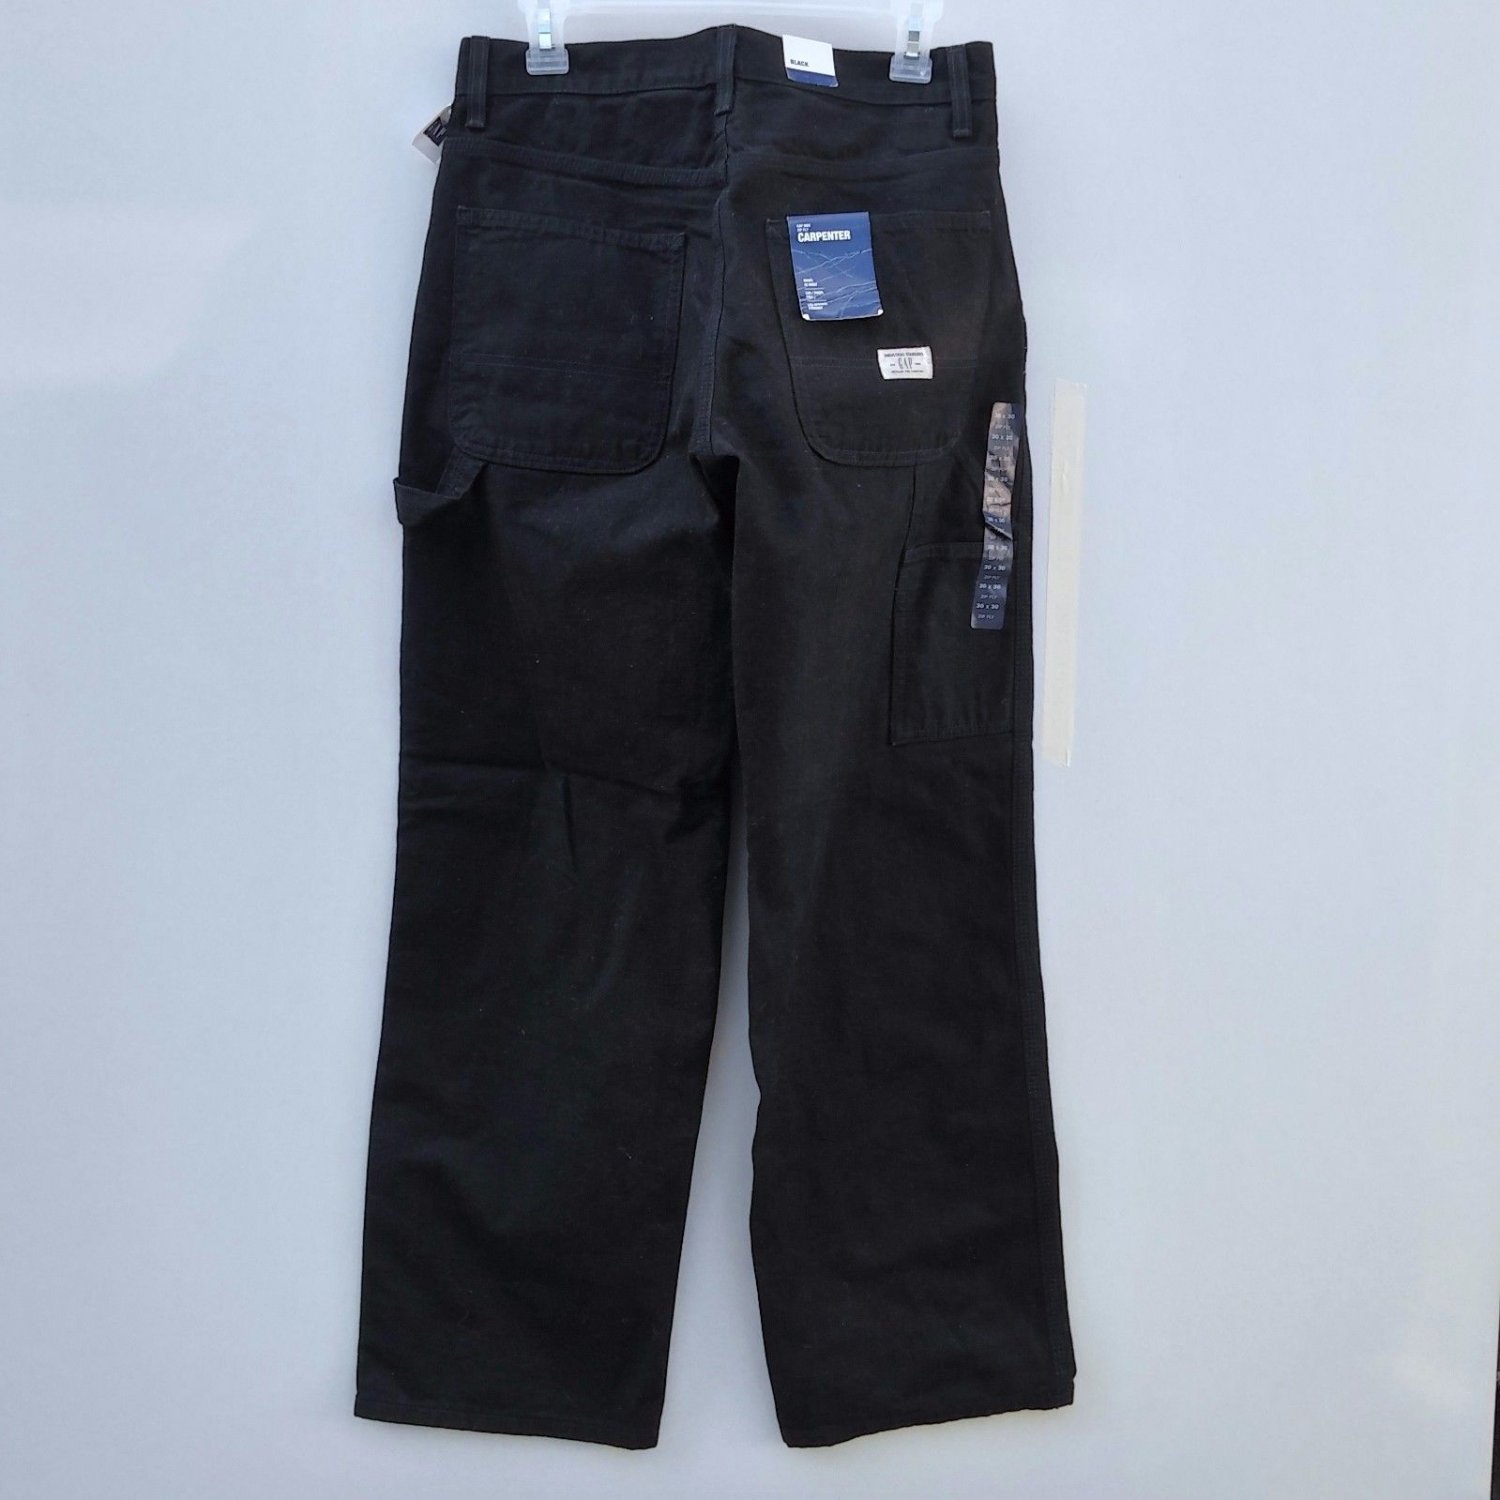 Gap CARPENTER Men's Jeans Size 30 X 30 Black